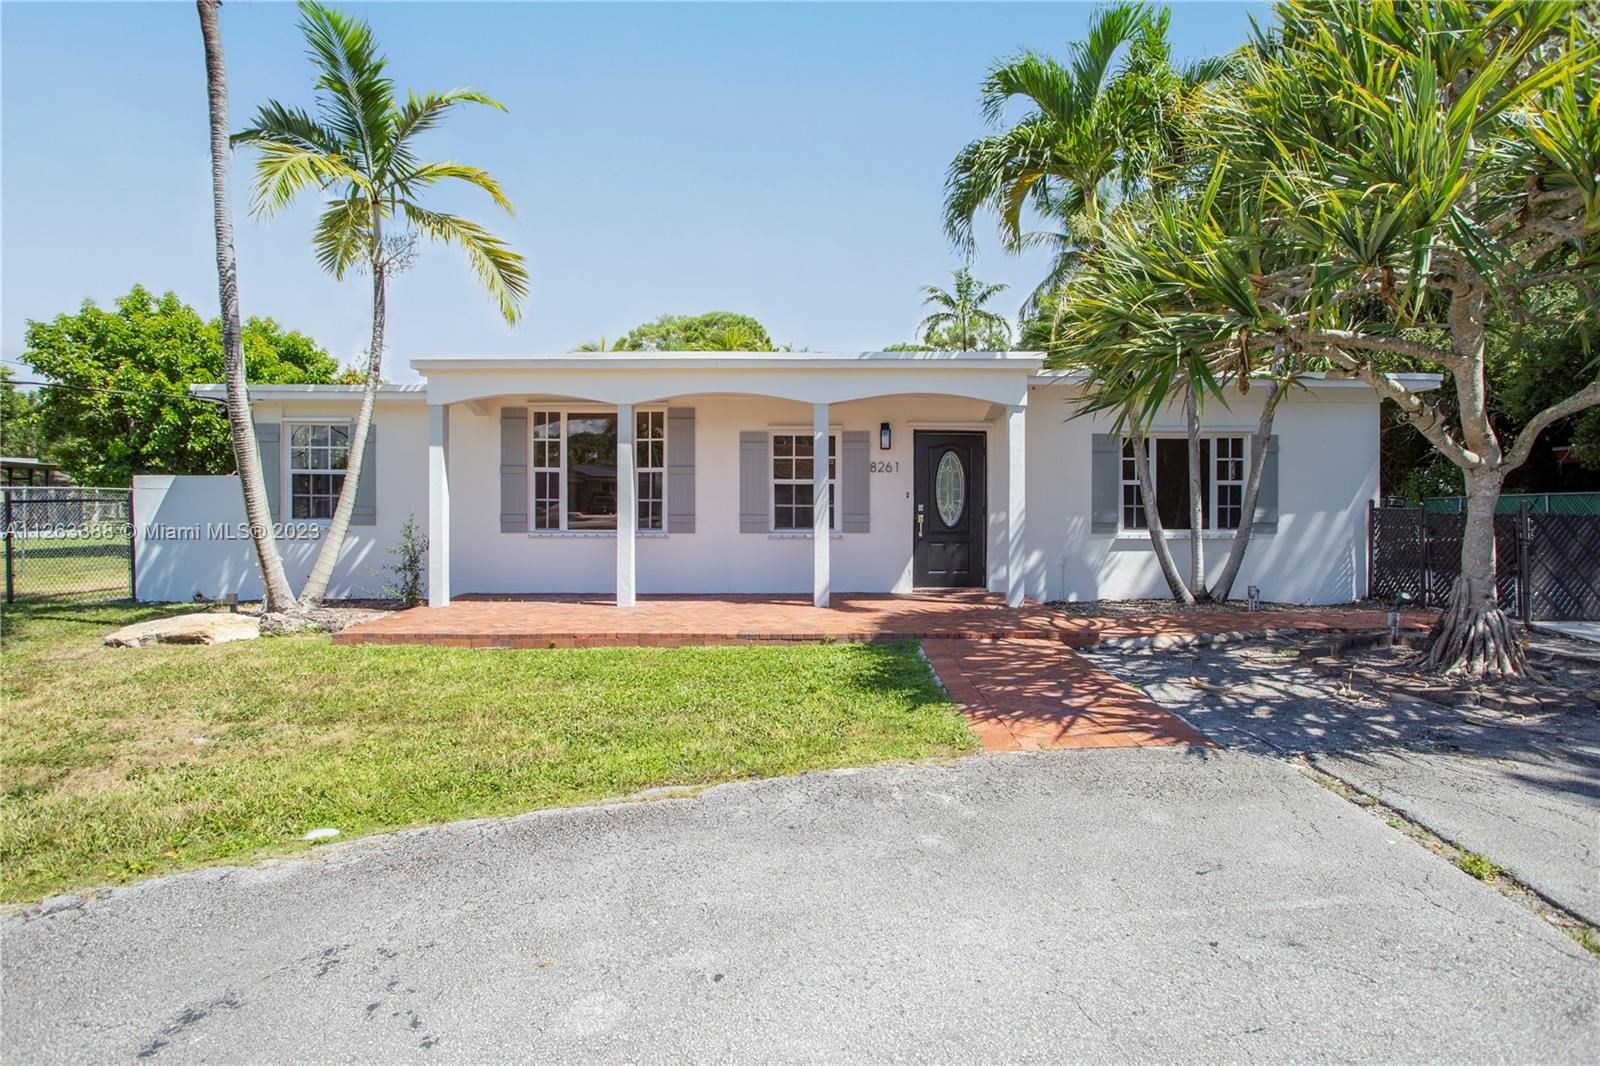 Real estate property located at 8261 58th St, Miami-Dade County, Miami, FL